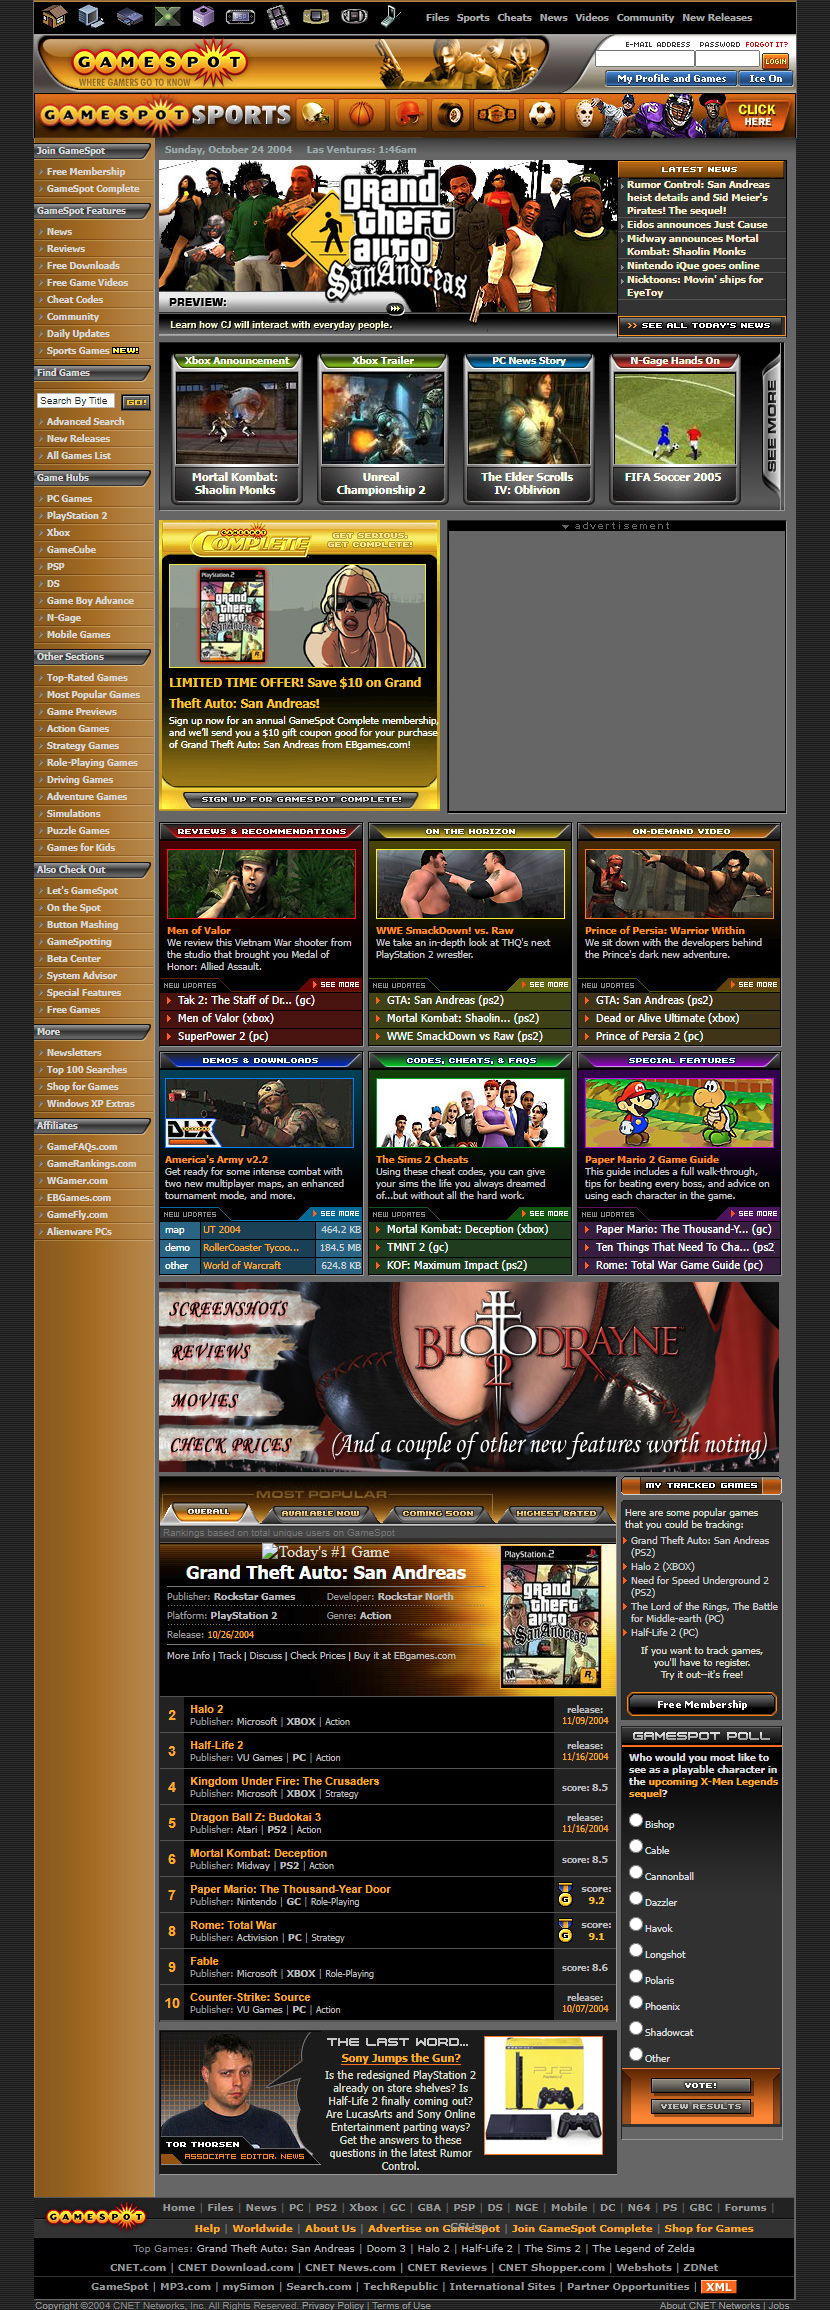 GameSpot in 2004